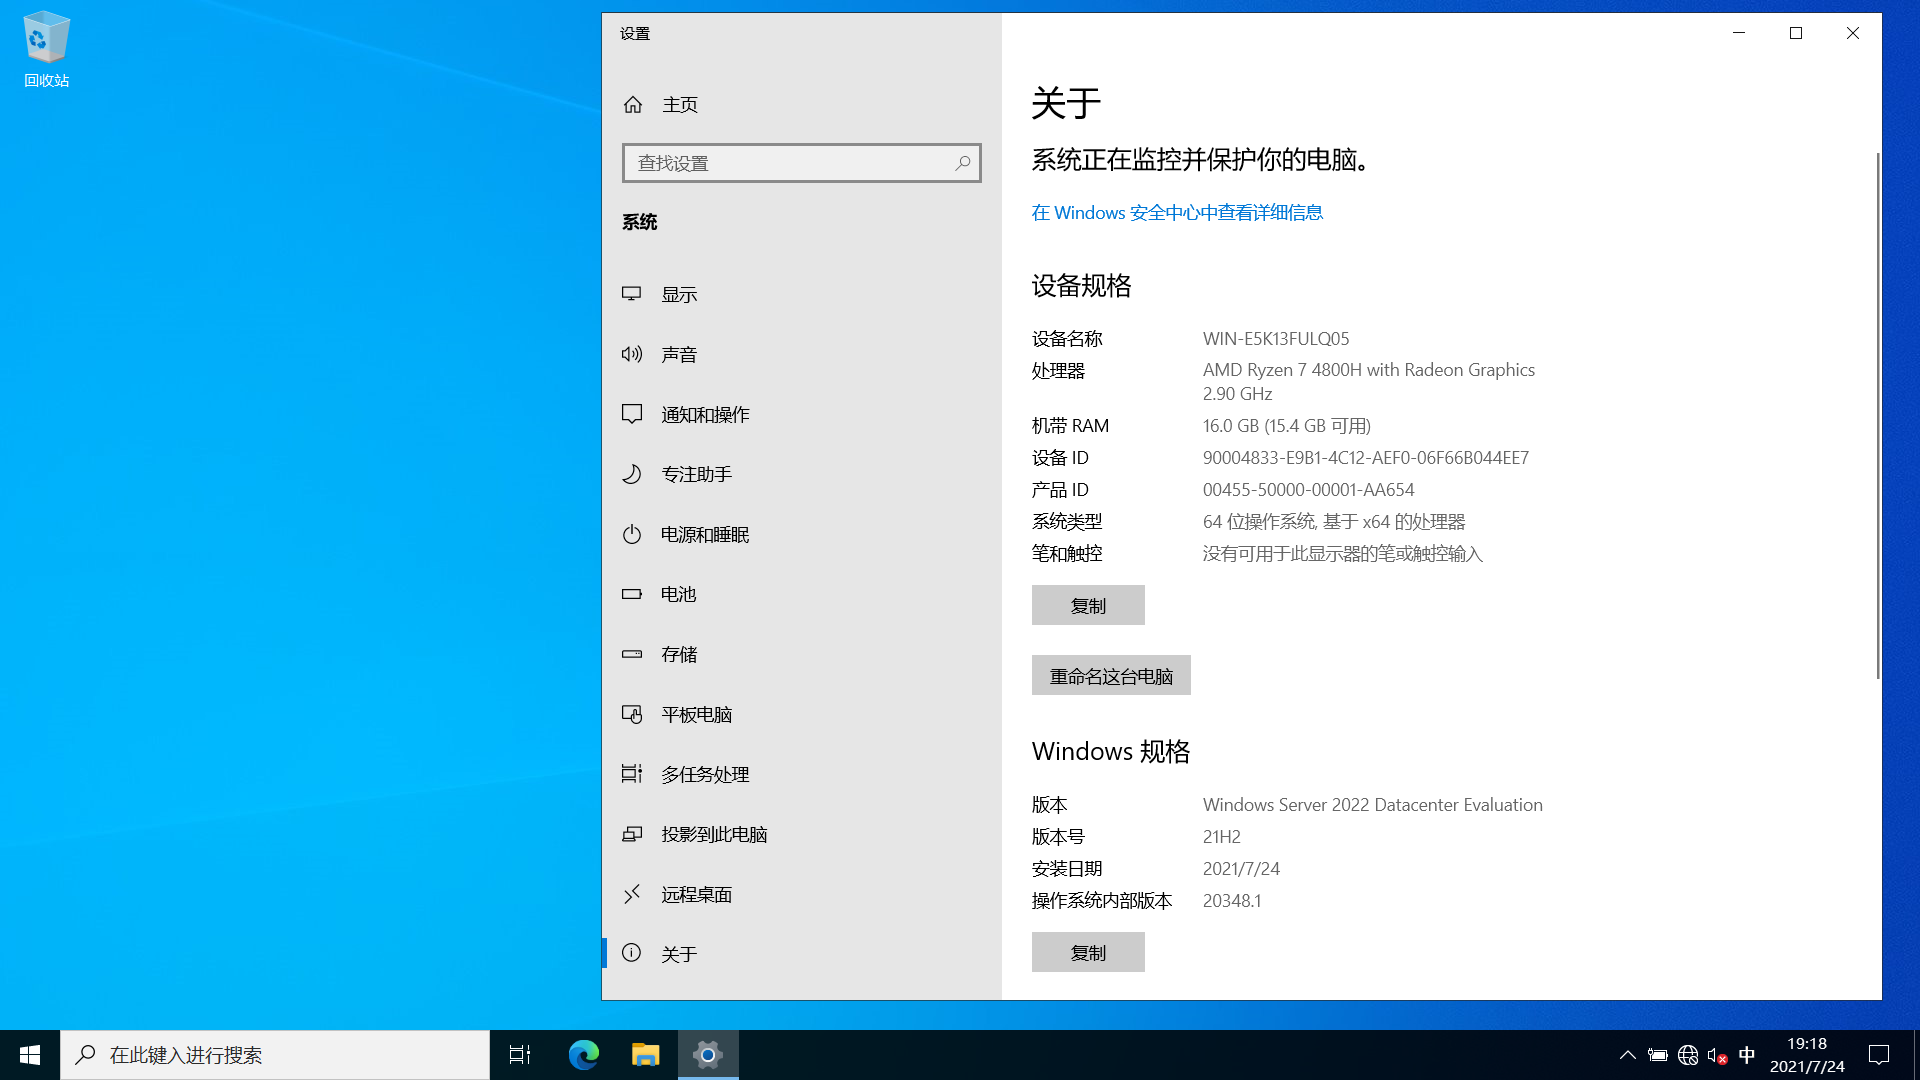 WindowsServer2022LTSCBuild20348.1简体中文版-程序员阿鑫-带你一起秃头！-第1张图片